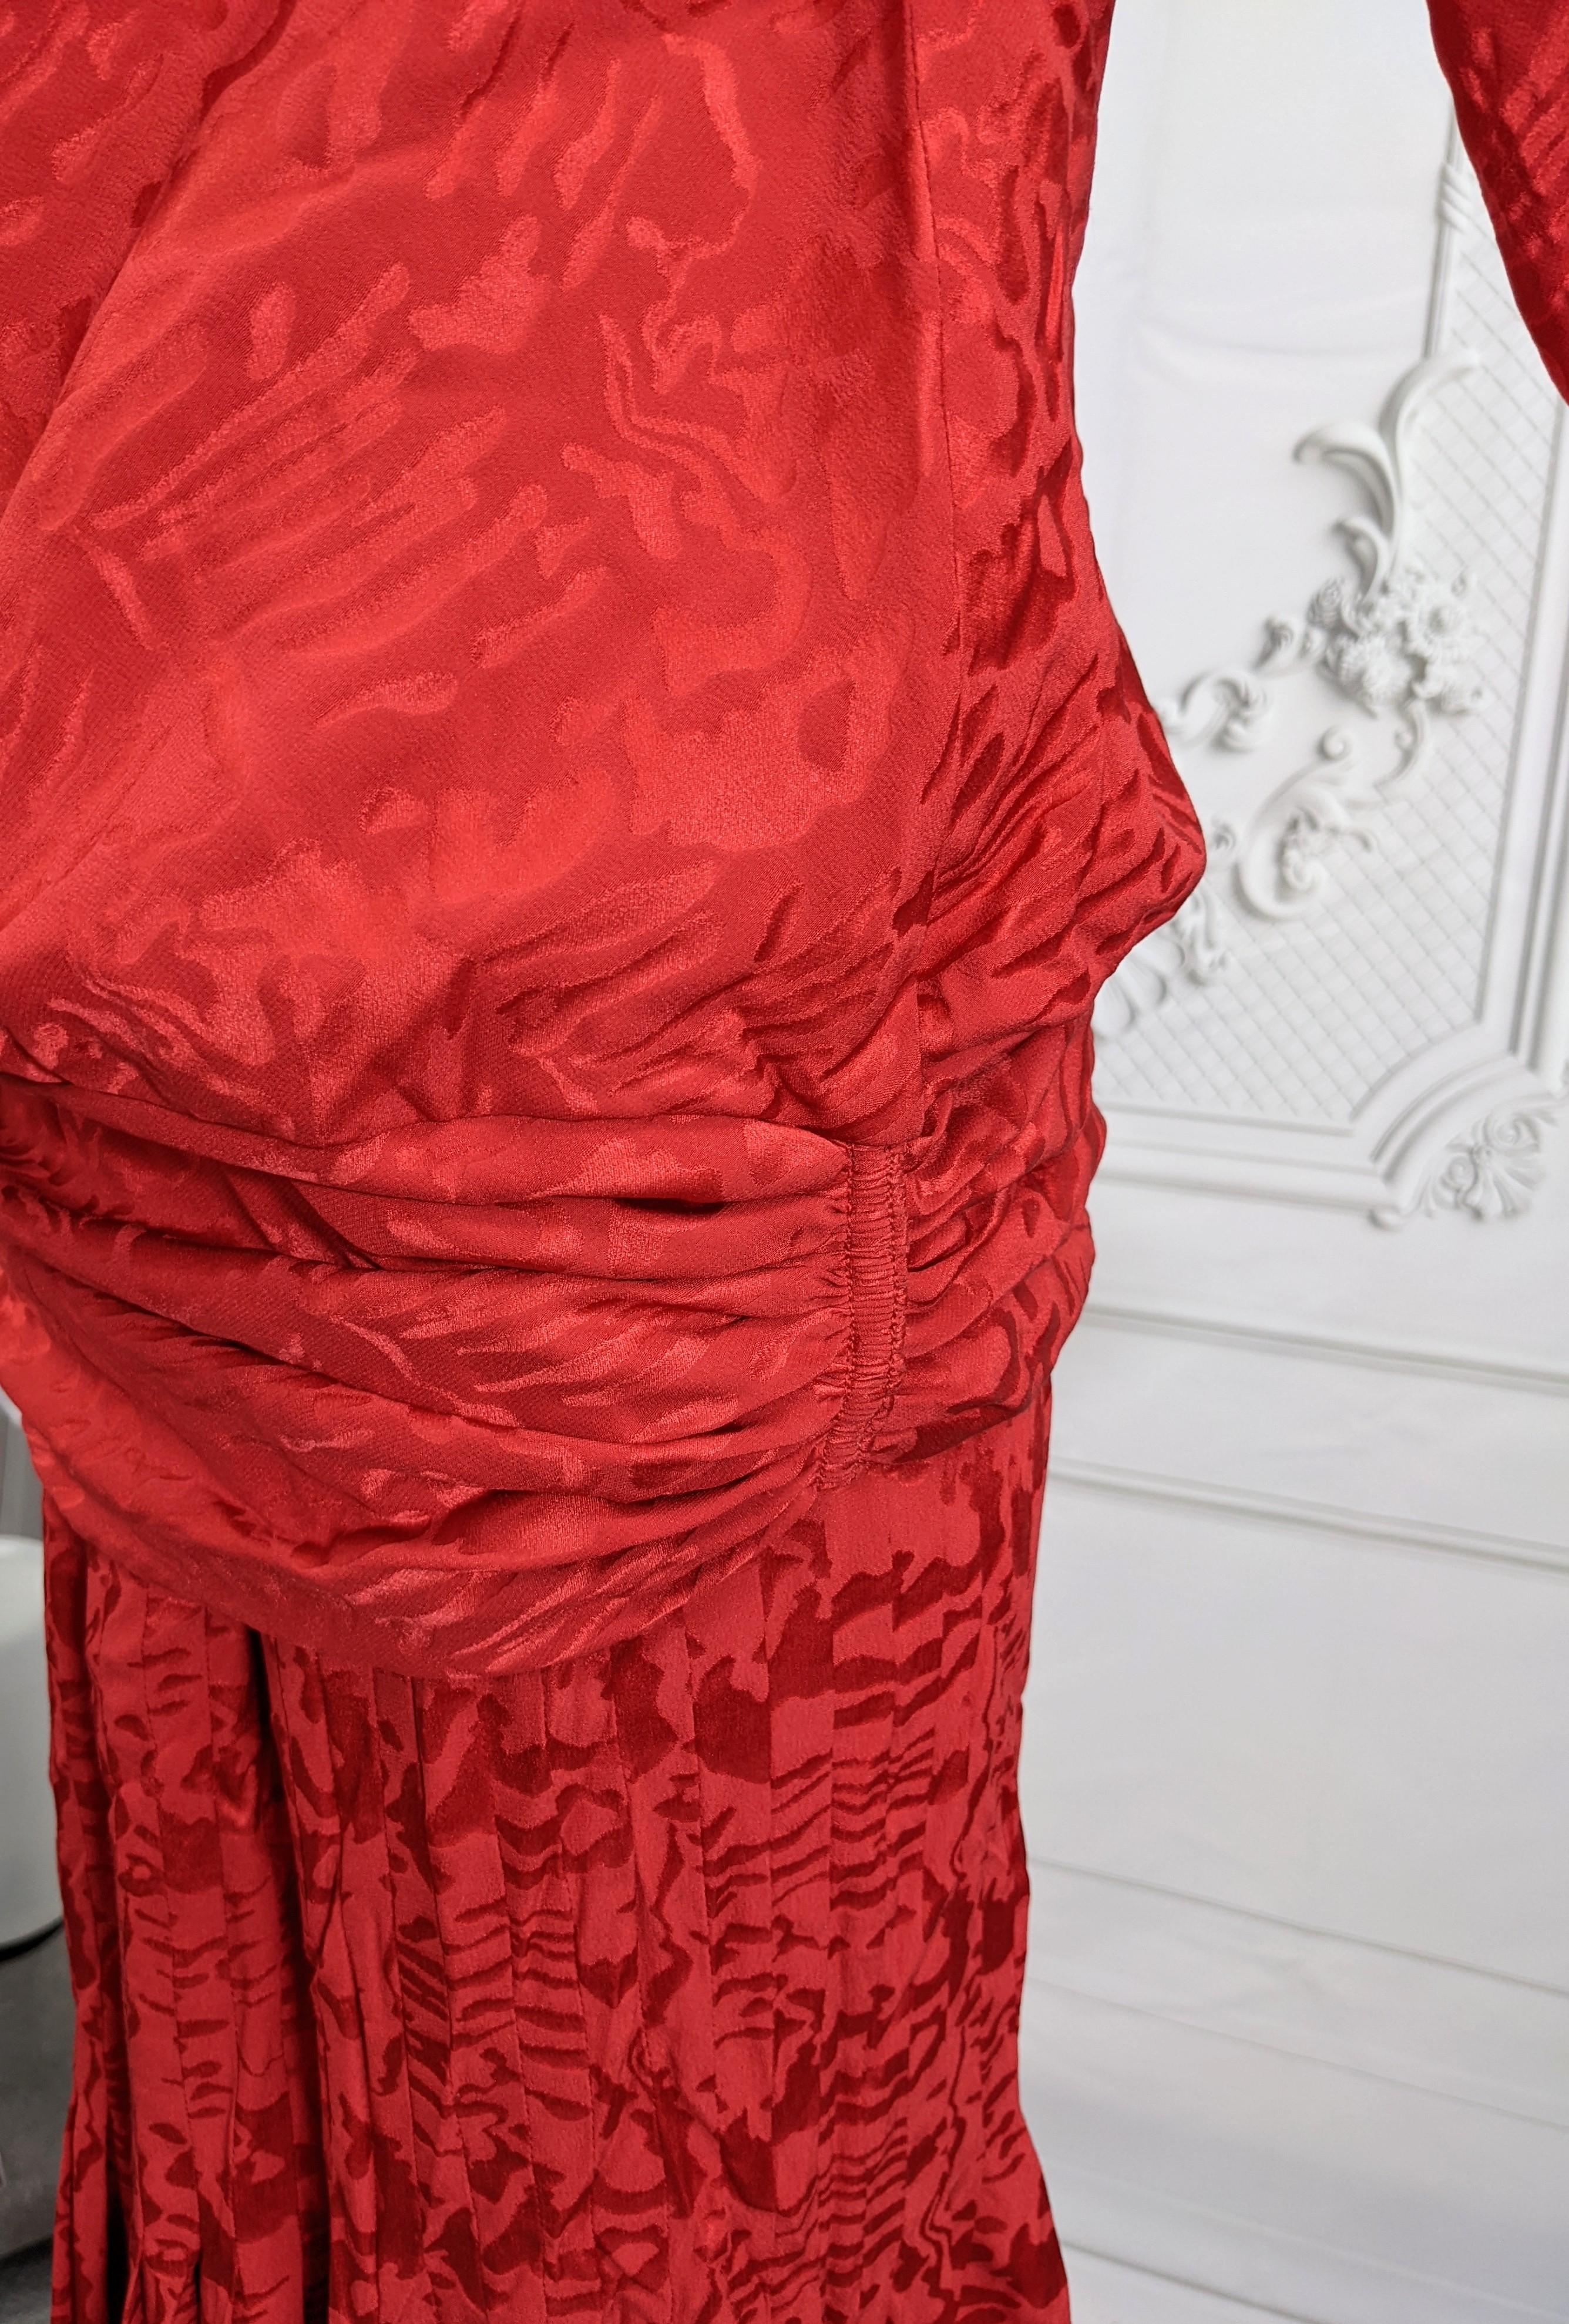 Oscar de la Renta Silk Jacquard Evening Gown In Good Condition For Sale In New York, NY